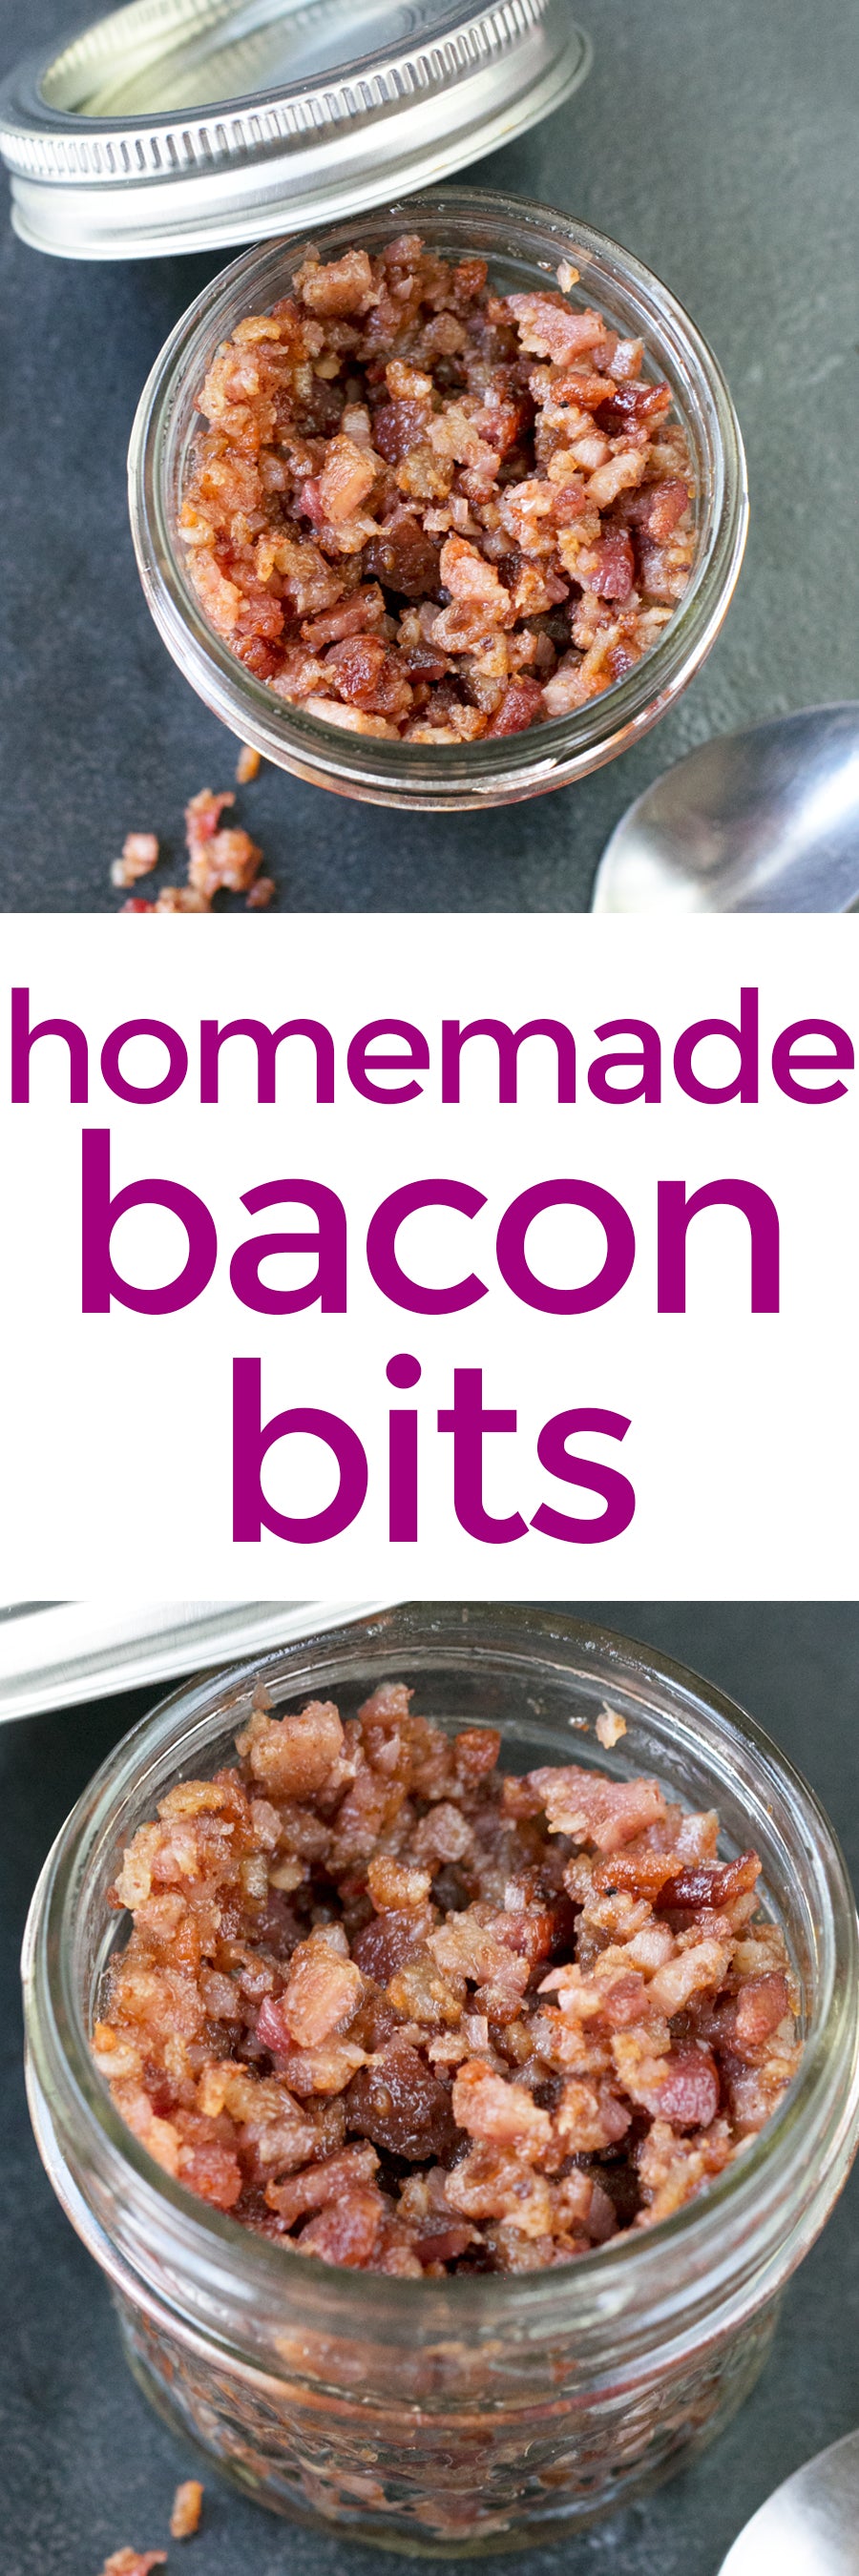 Homemade Bacon Bits | pigofthemonth.com #bacon #yummy